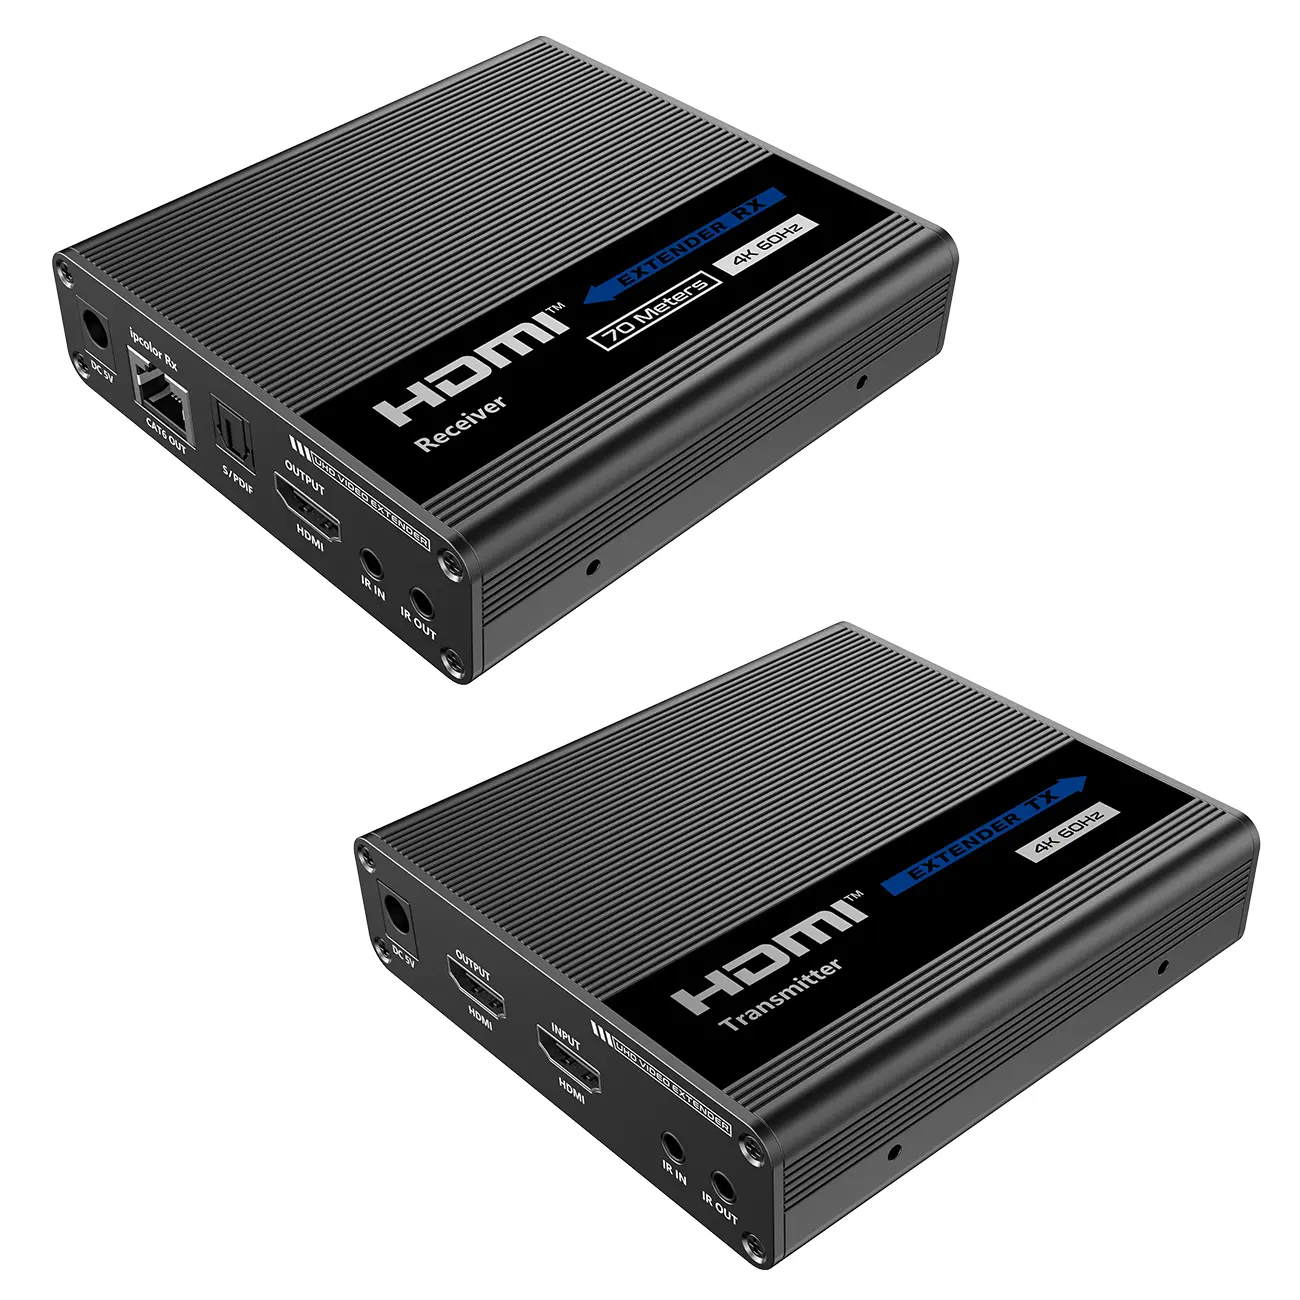  Konwerter HDMI na LAN Kaskada 4K Spacetronik IP SPH-676C ipcolor  Zestaw